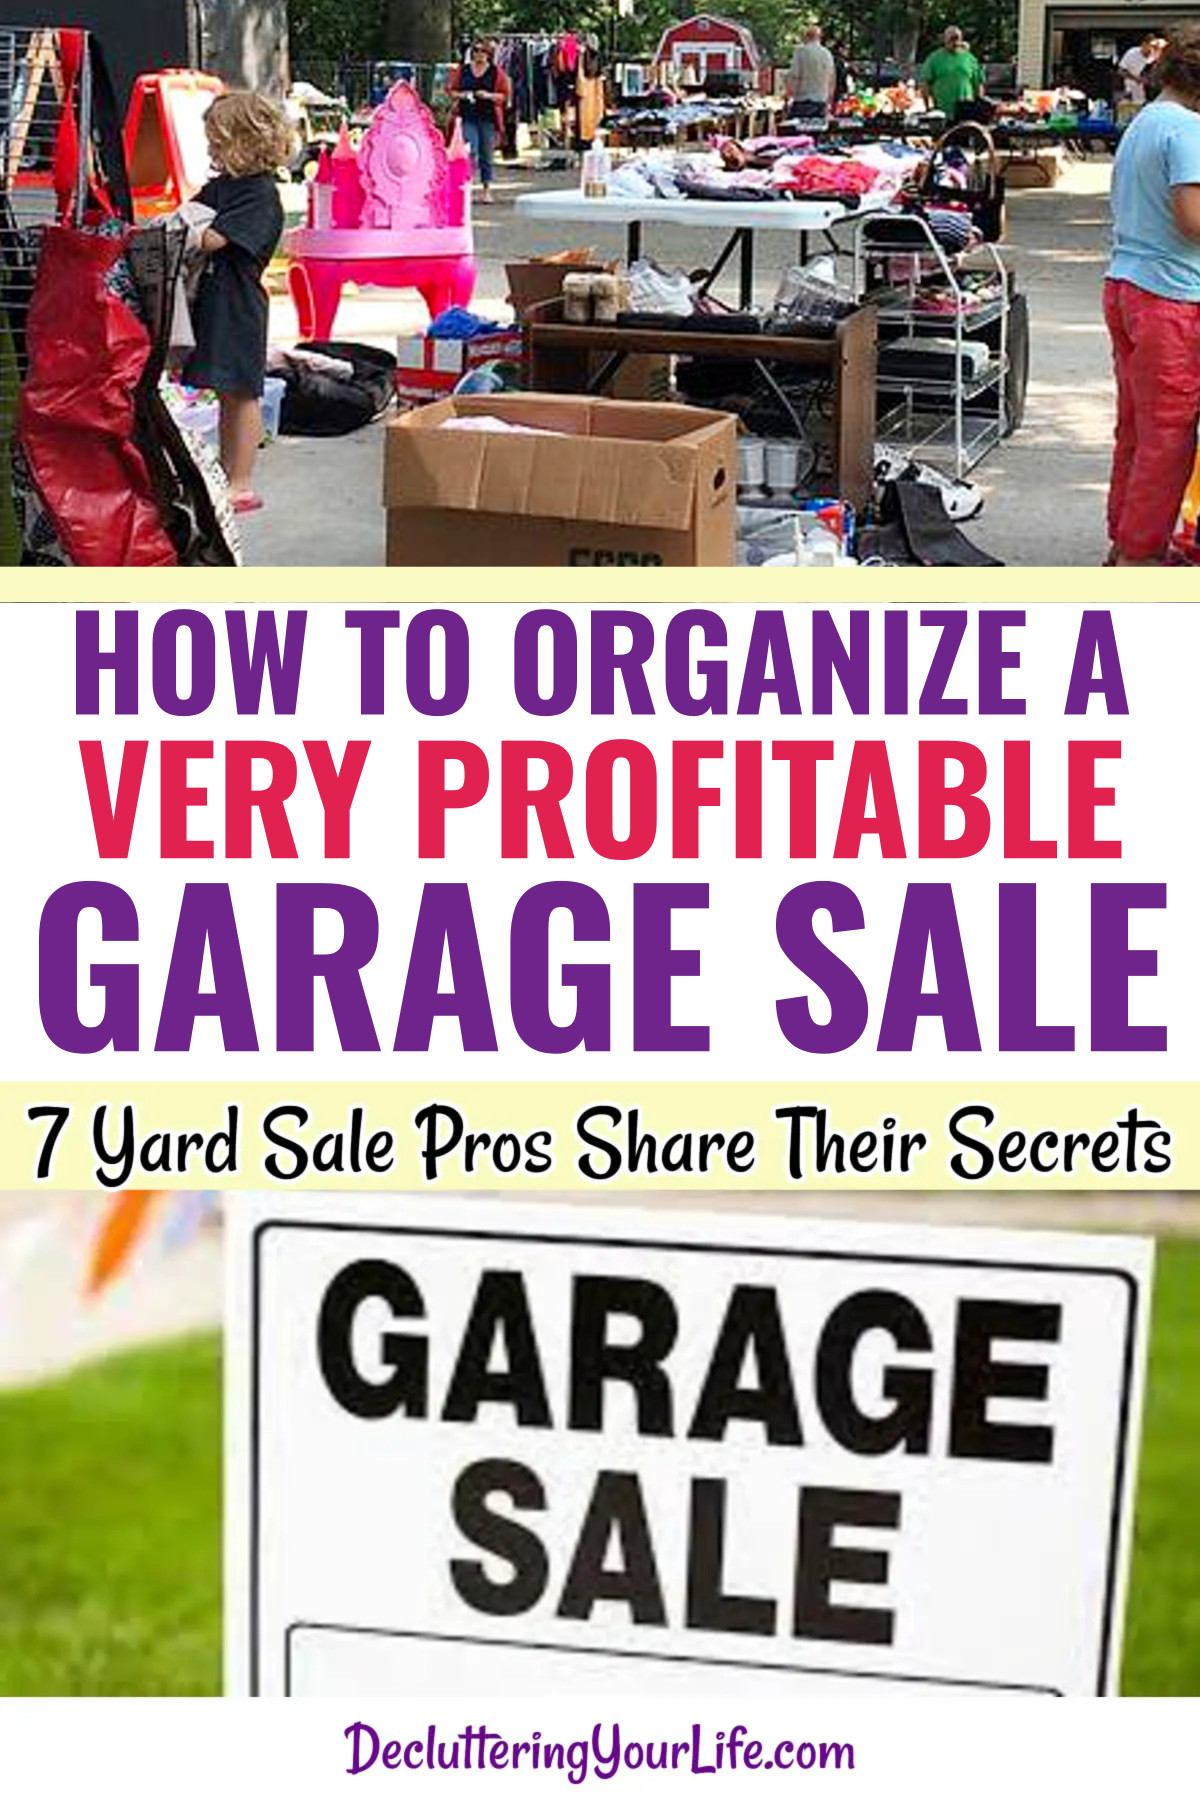 Yard sale tips and tricks